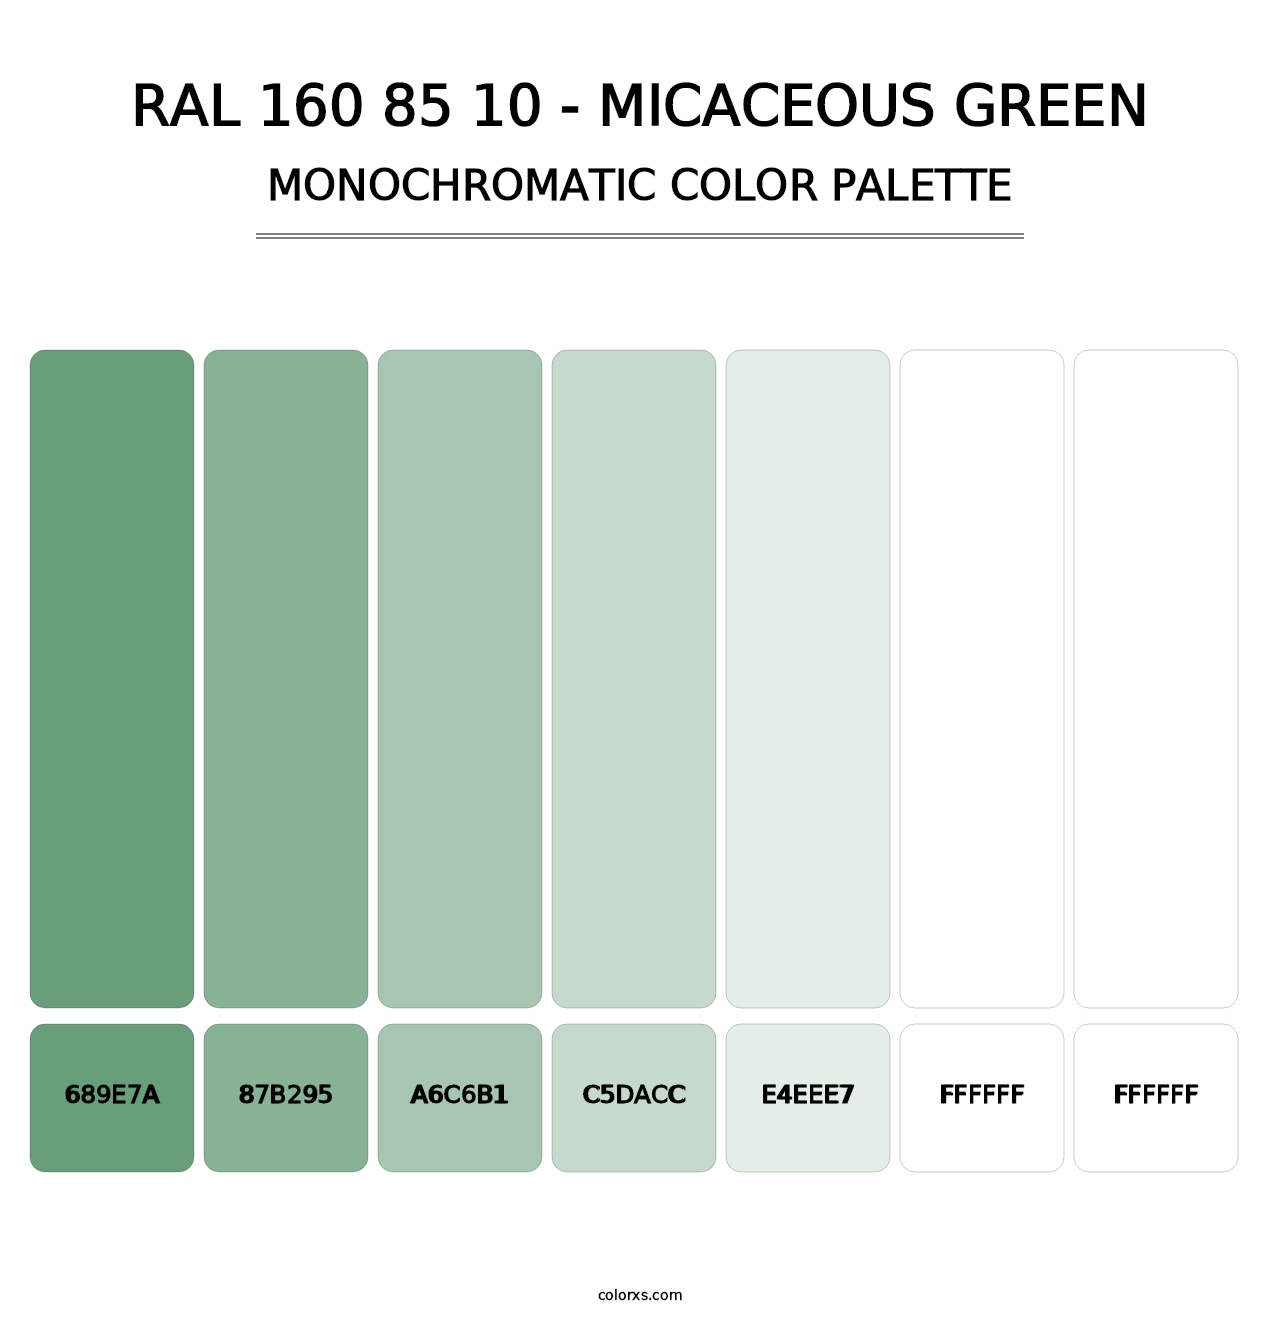 RAL 160 85 10 - Micaceous Green - Monochromatic Color Palette